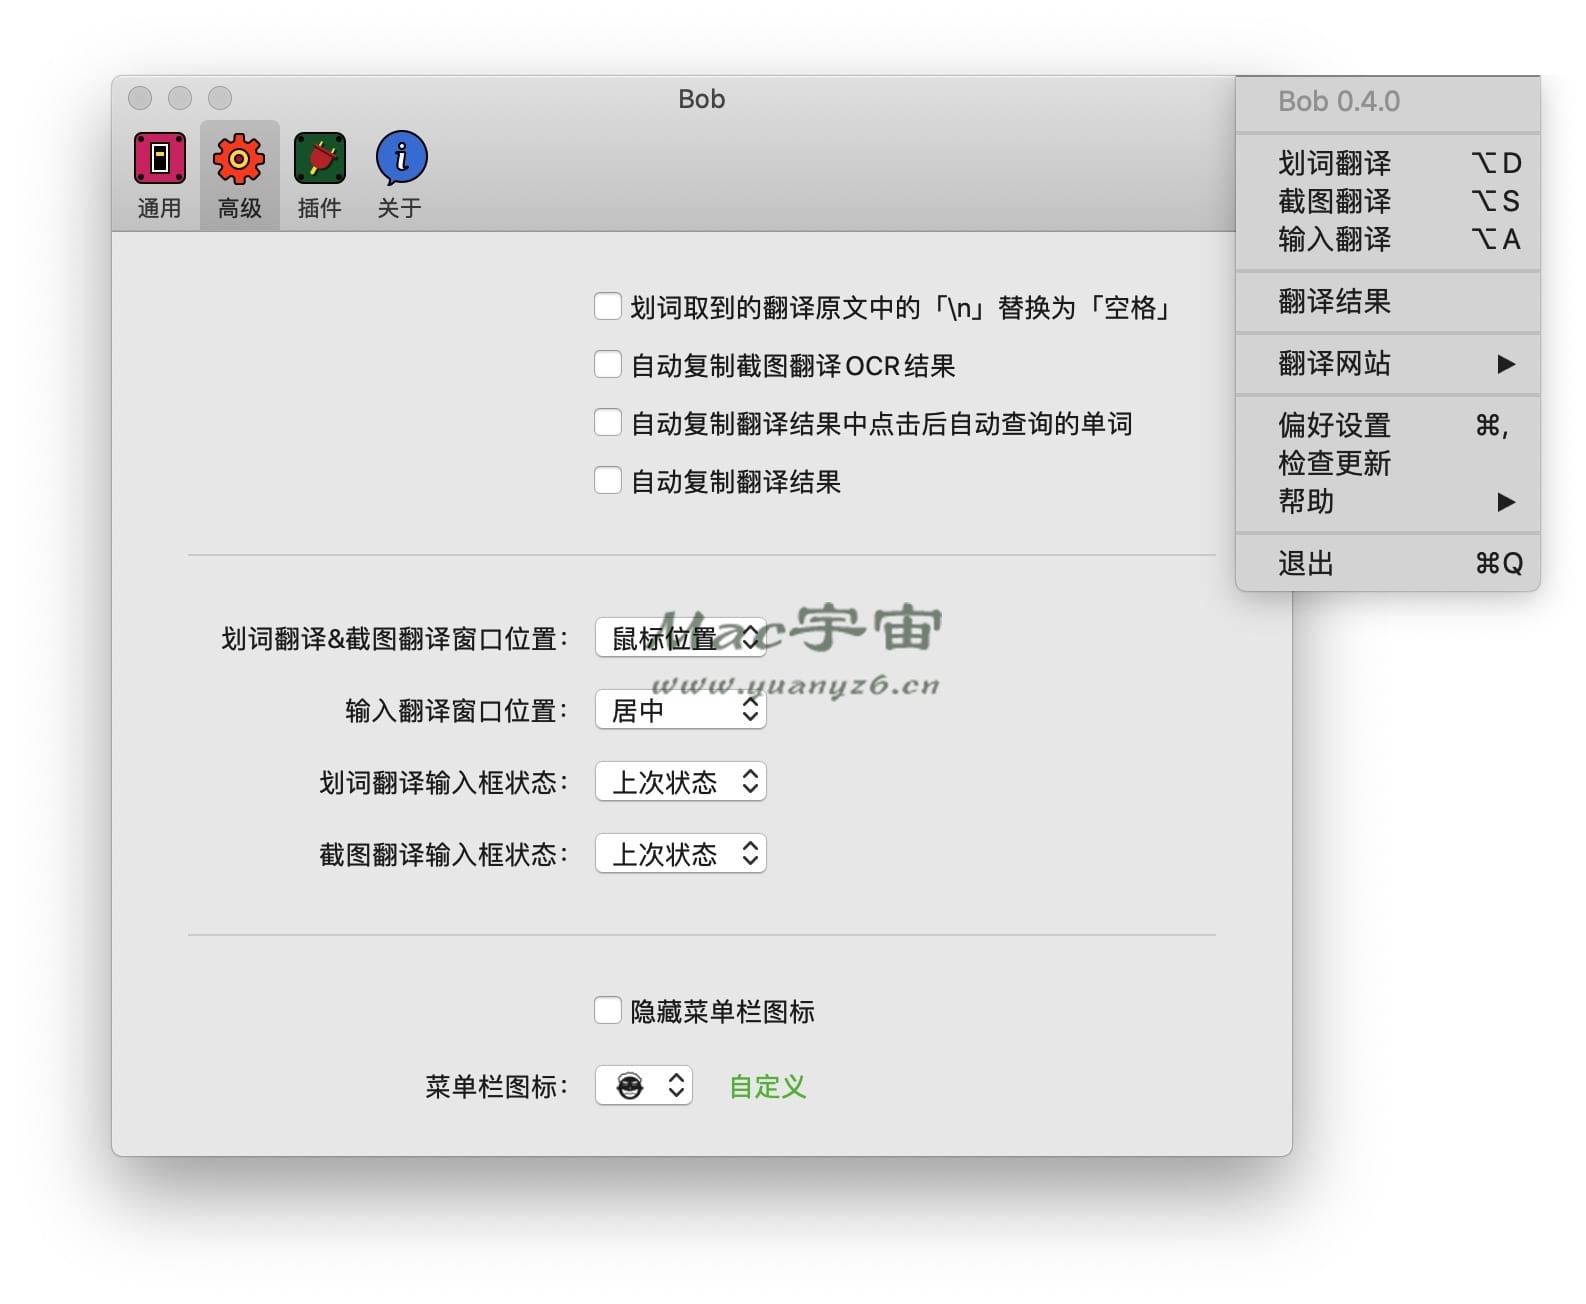 Bob for Mac v0.5.4 中文破解版 划词翻译和截图翻译工具 苹果电脑